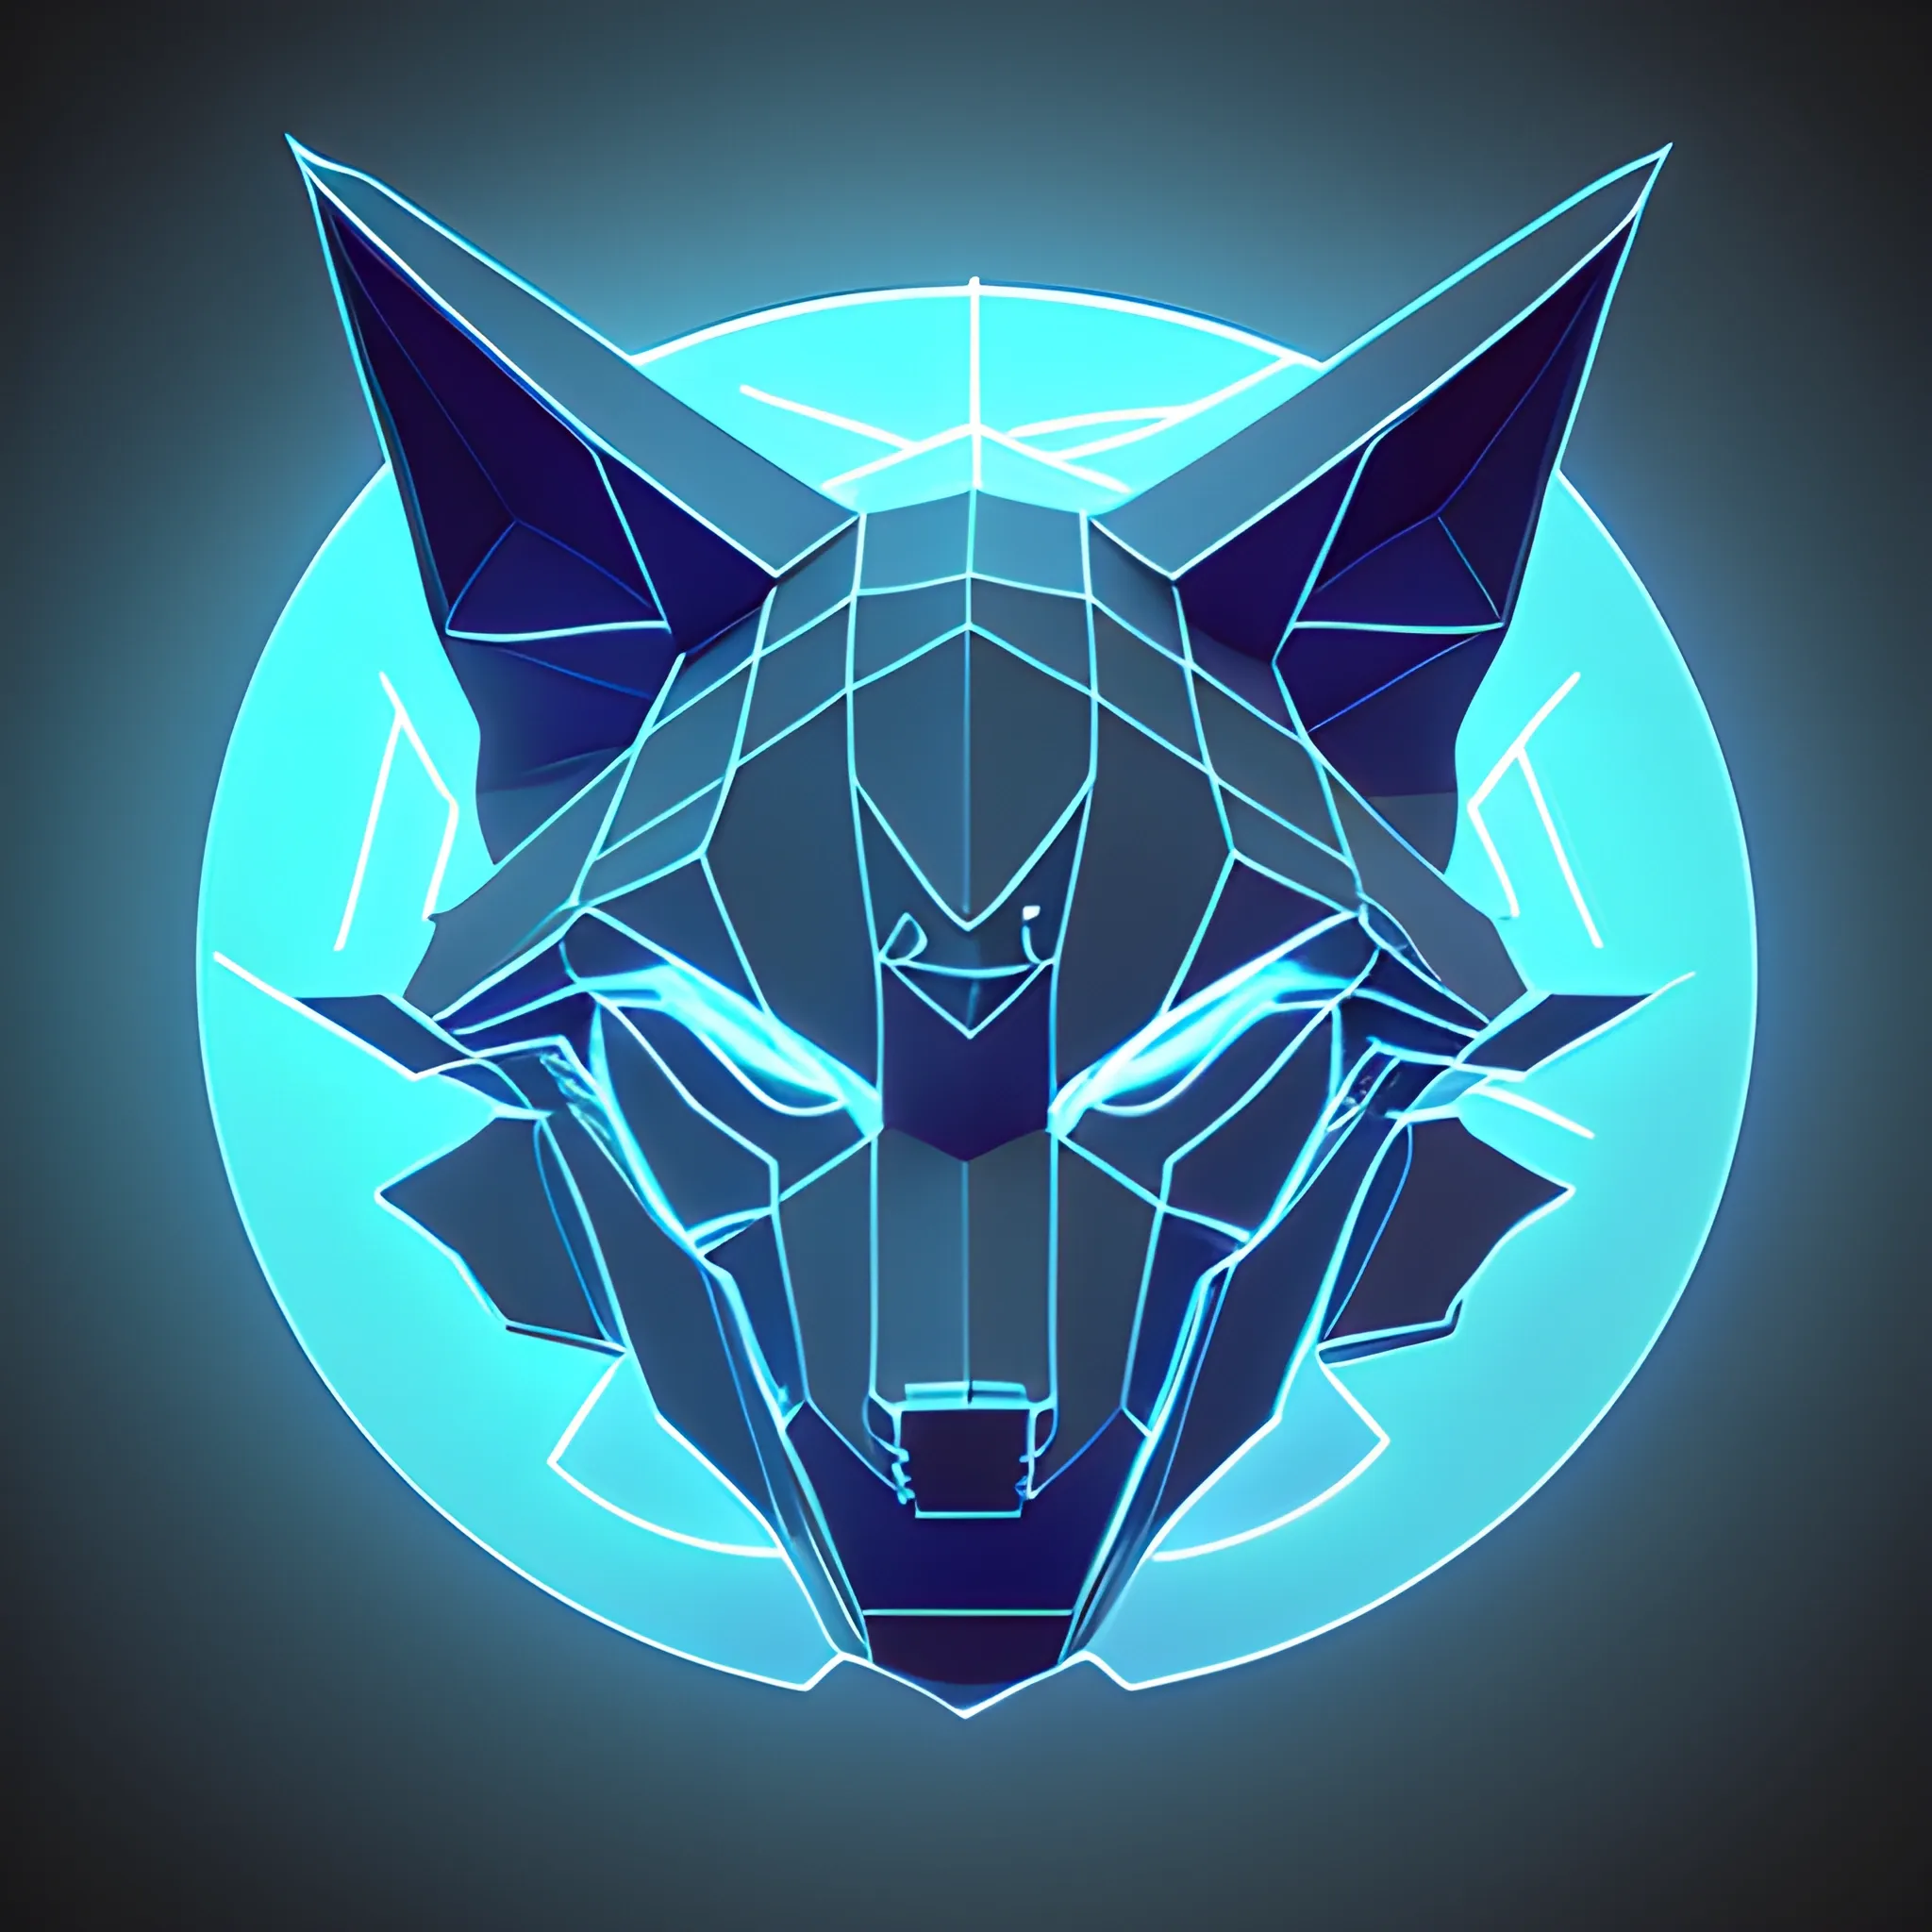 Cyberpunk lone wolf  logo outline
, 3D, Trippy,